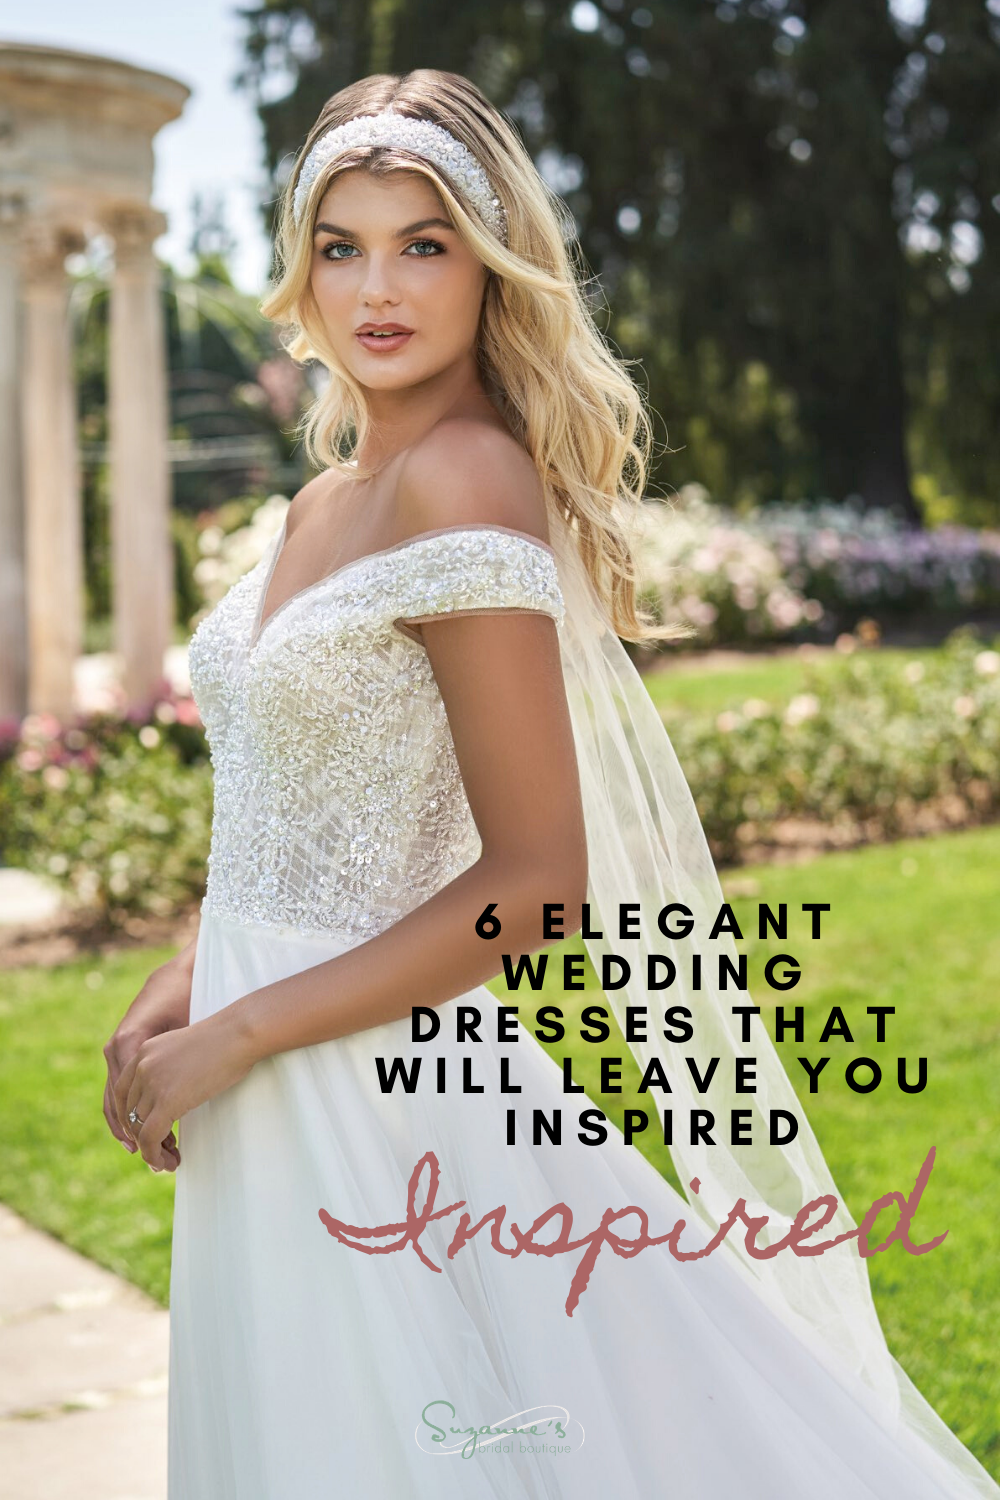 6 Elegant Wedding Dresses That Will Leave You Inspired. Desktop Image